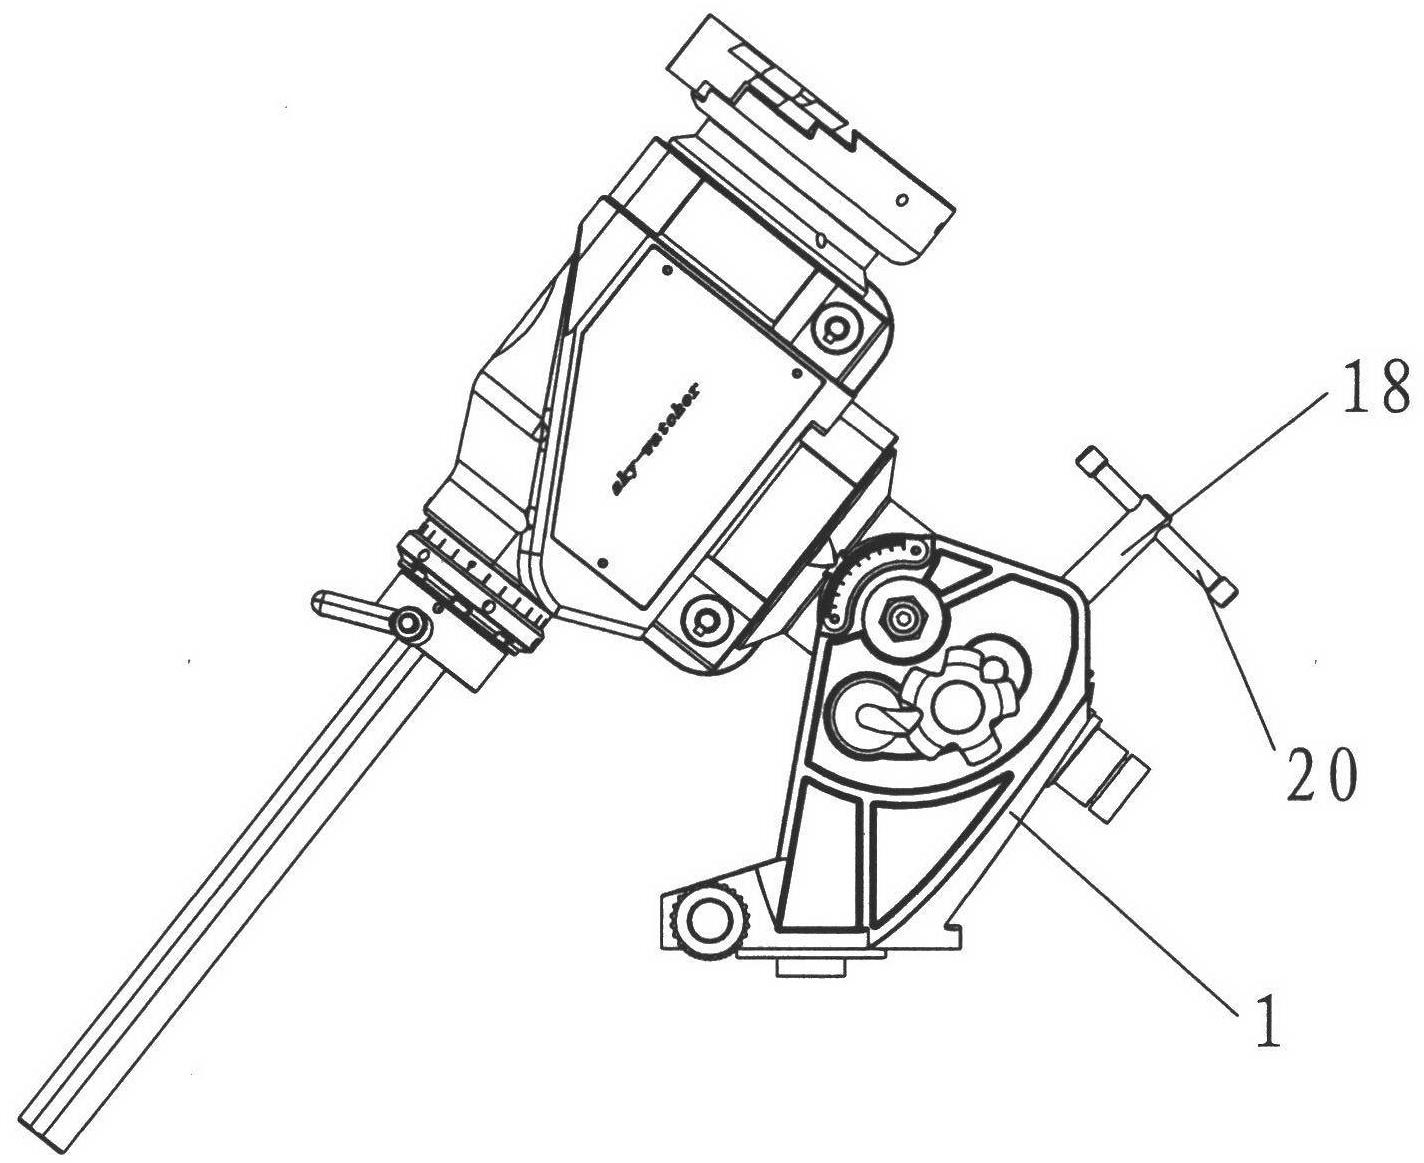 Latitude adjusting mechanism for equatorial telescope bracket